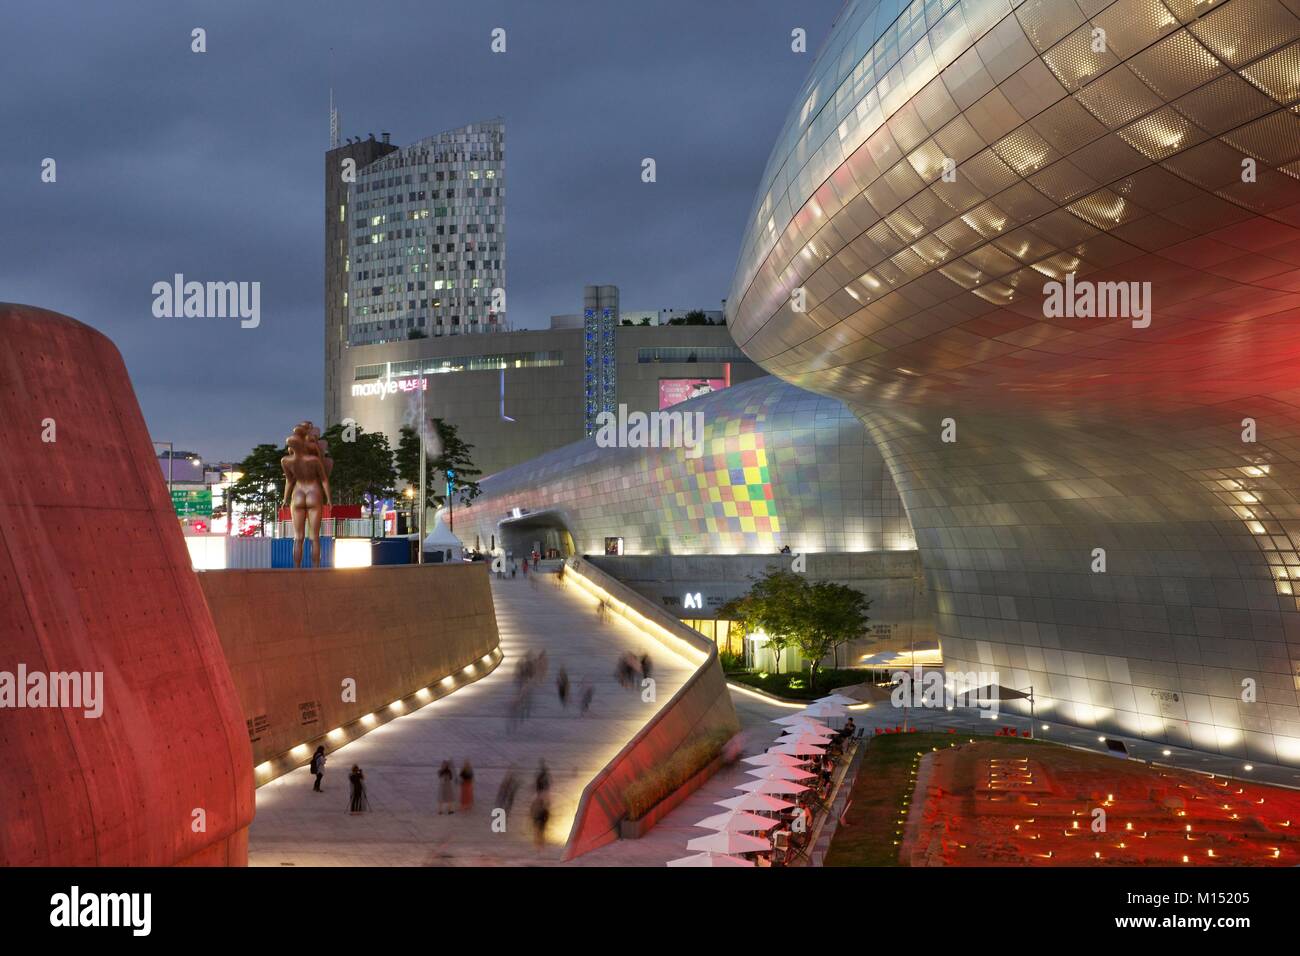 South Korea, Seoul, Dongdaemun Design Plaza, futuristic building of the architect Zaha Hadid, lit at night Stock Photo